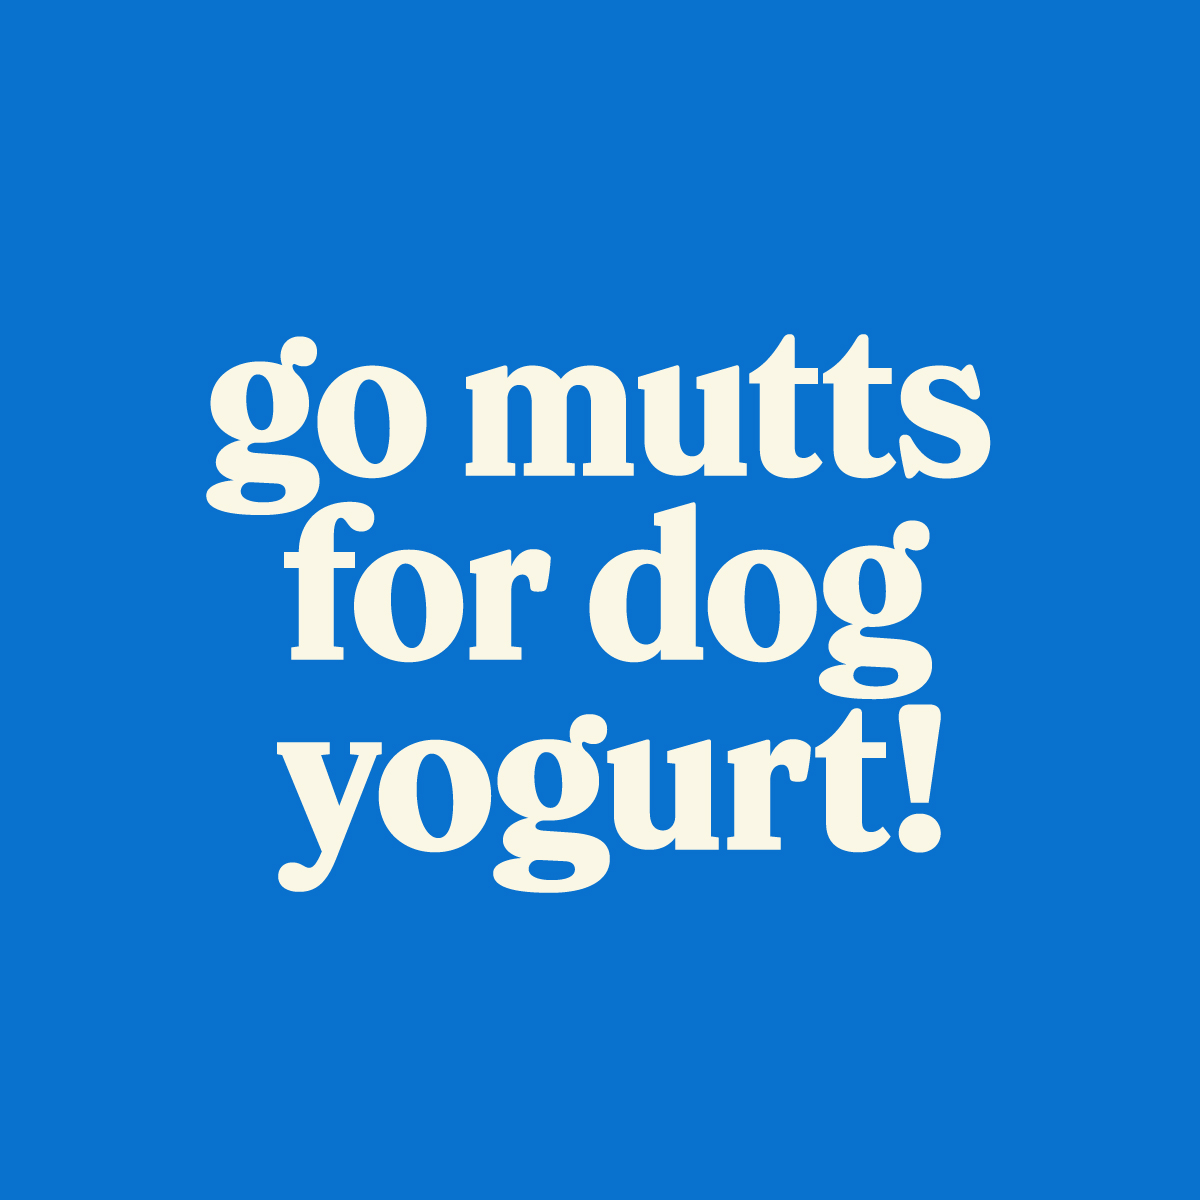 Chobani Australia Daily Dollop Dog Yogurt - Brand Personality: Go mutts for dog yogurt!